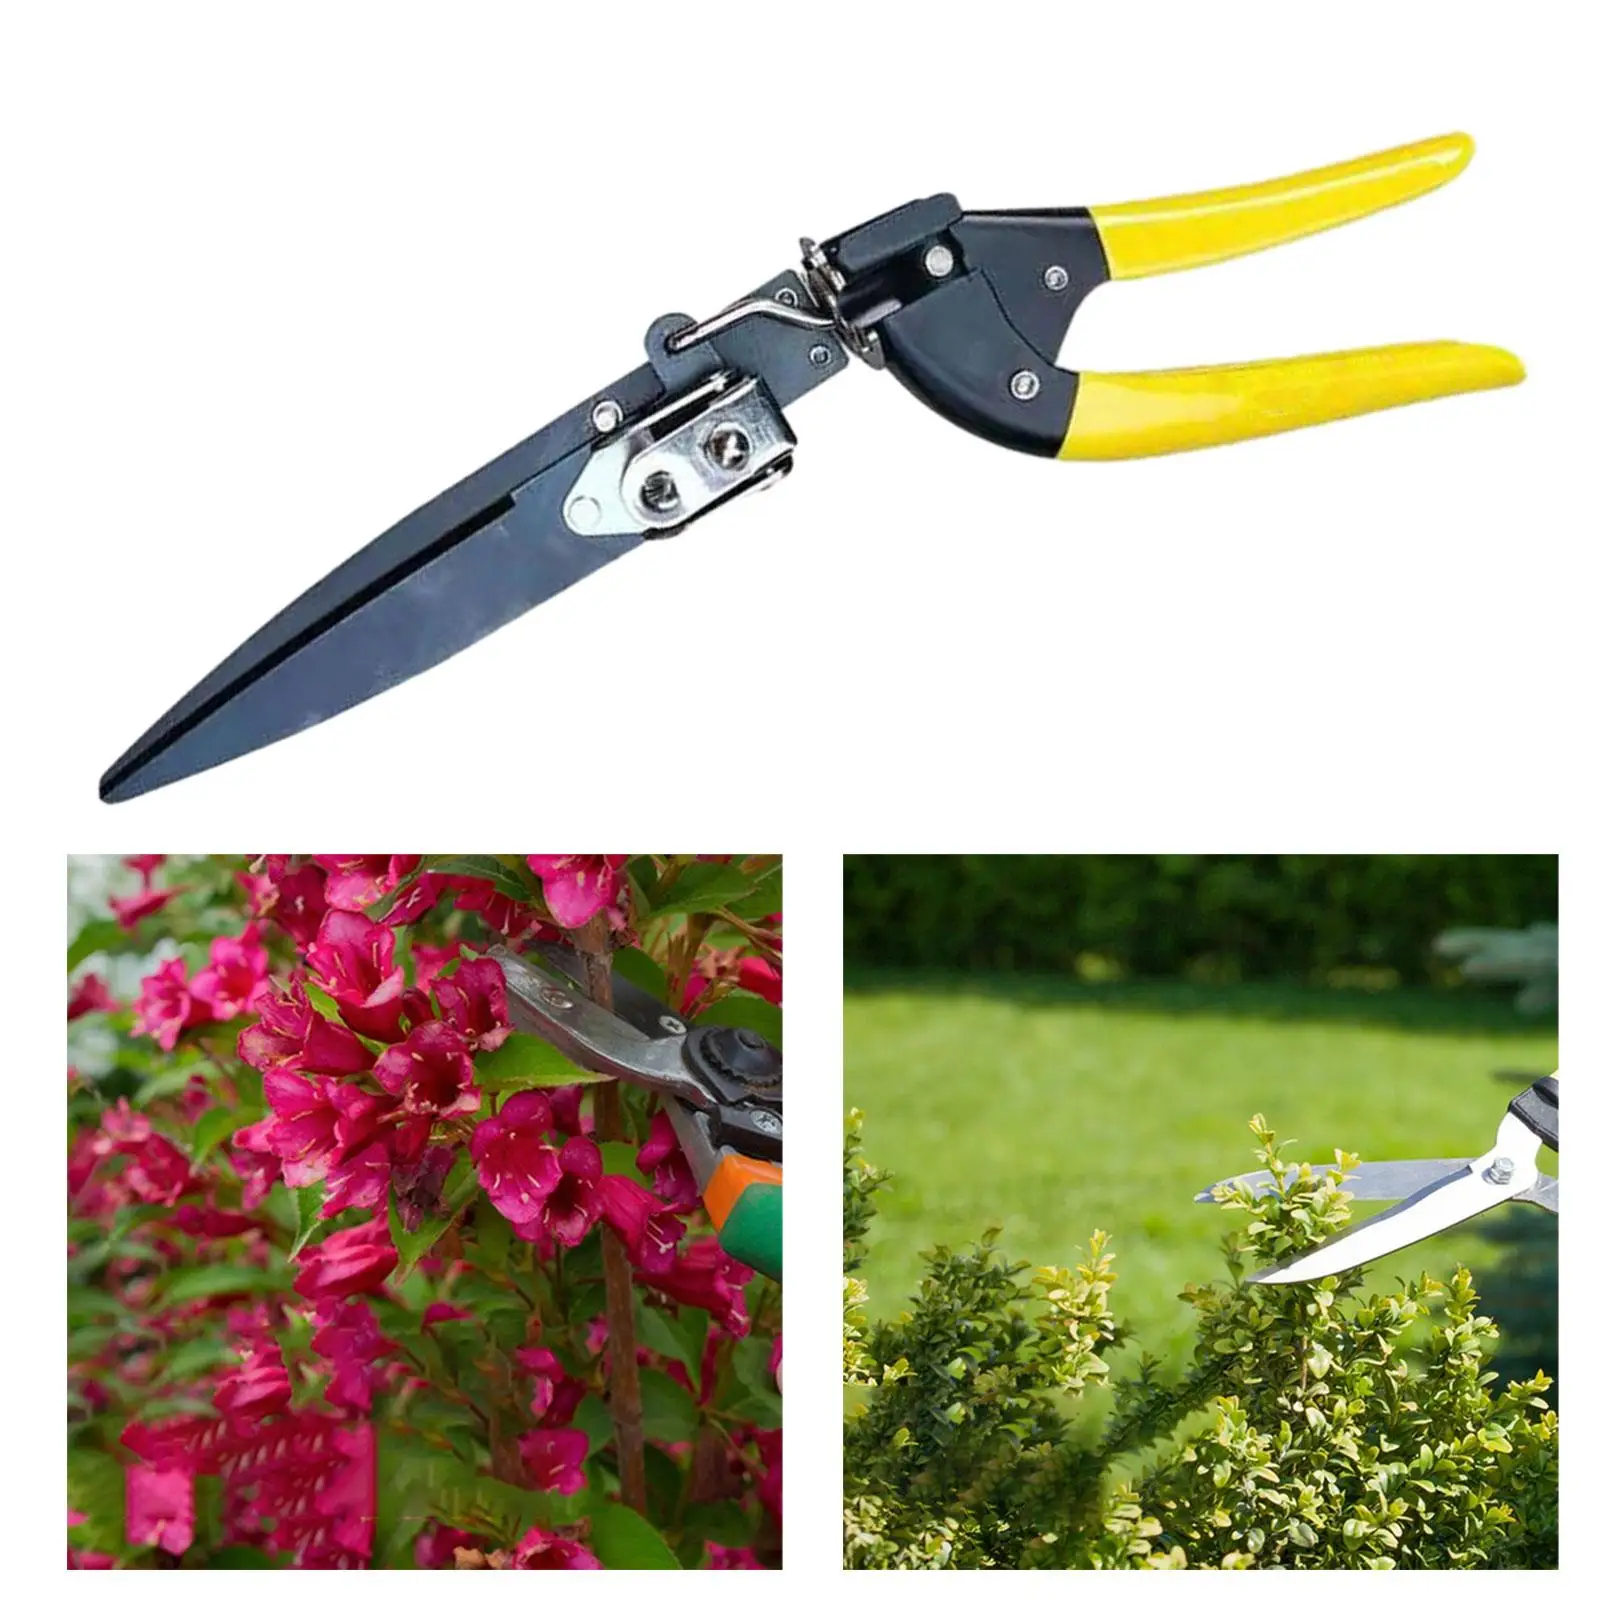 Gardening Scissors Multifunctional Gardening Tools Anti Slip Handle Plant Trimming Scissors for Bonsai Farm Home Orchard Yard